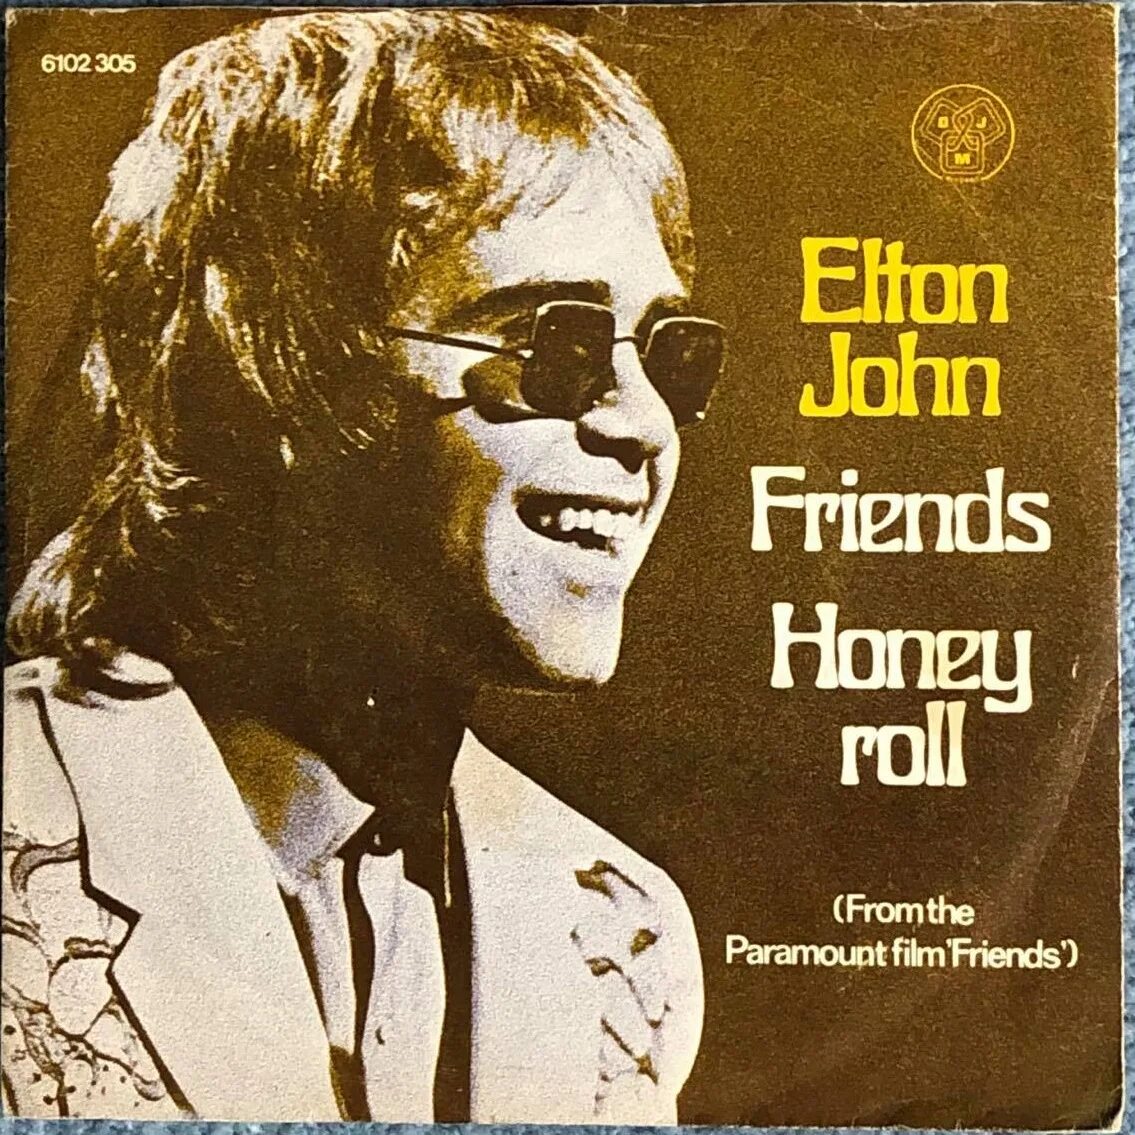 Обложка friends Элтон Джон. Elton John пластинка. Blue featuring Elton John. Друг Элтона Джона. Elton john текст